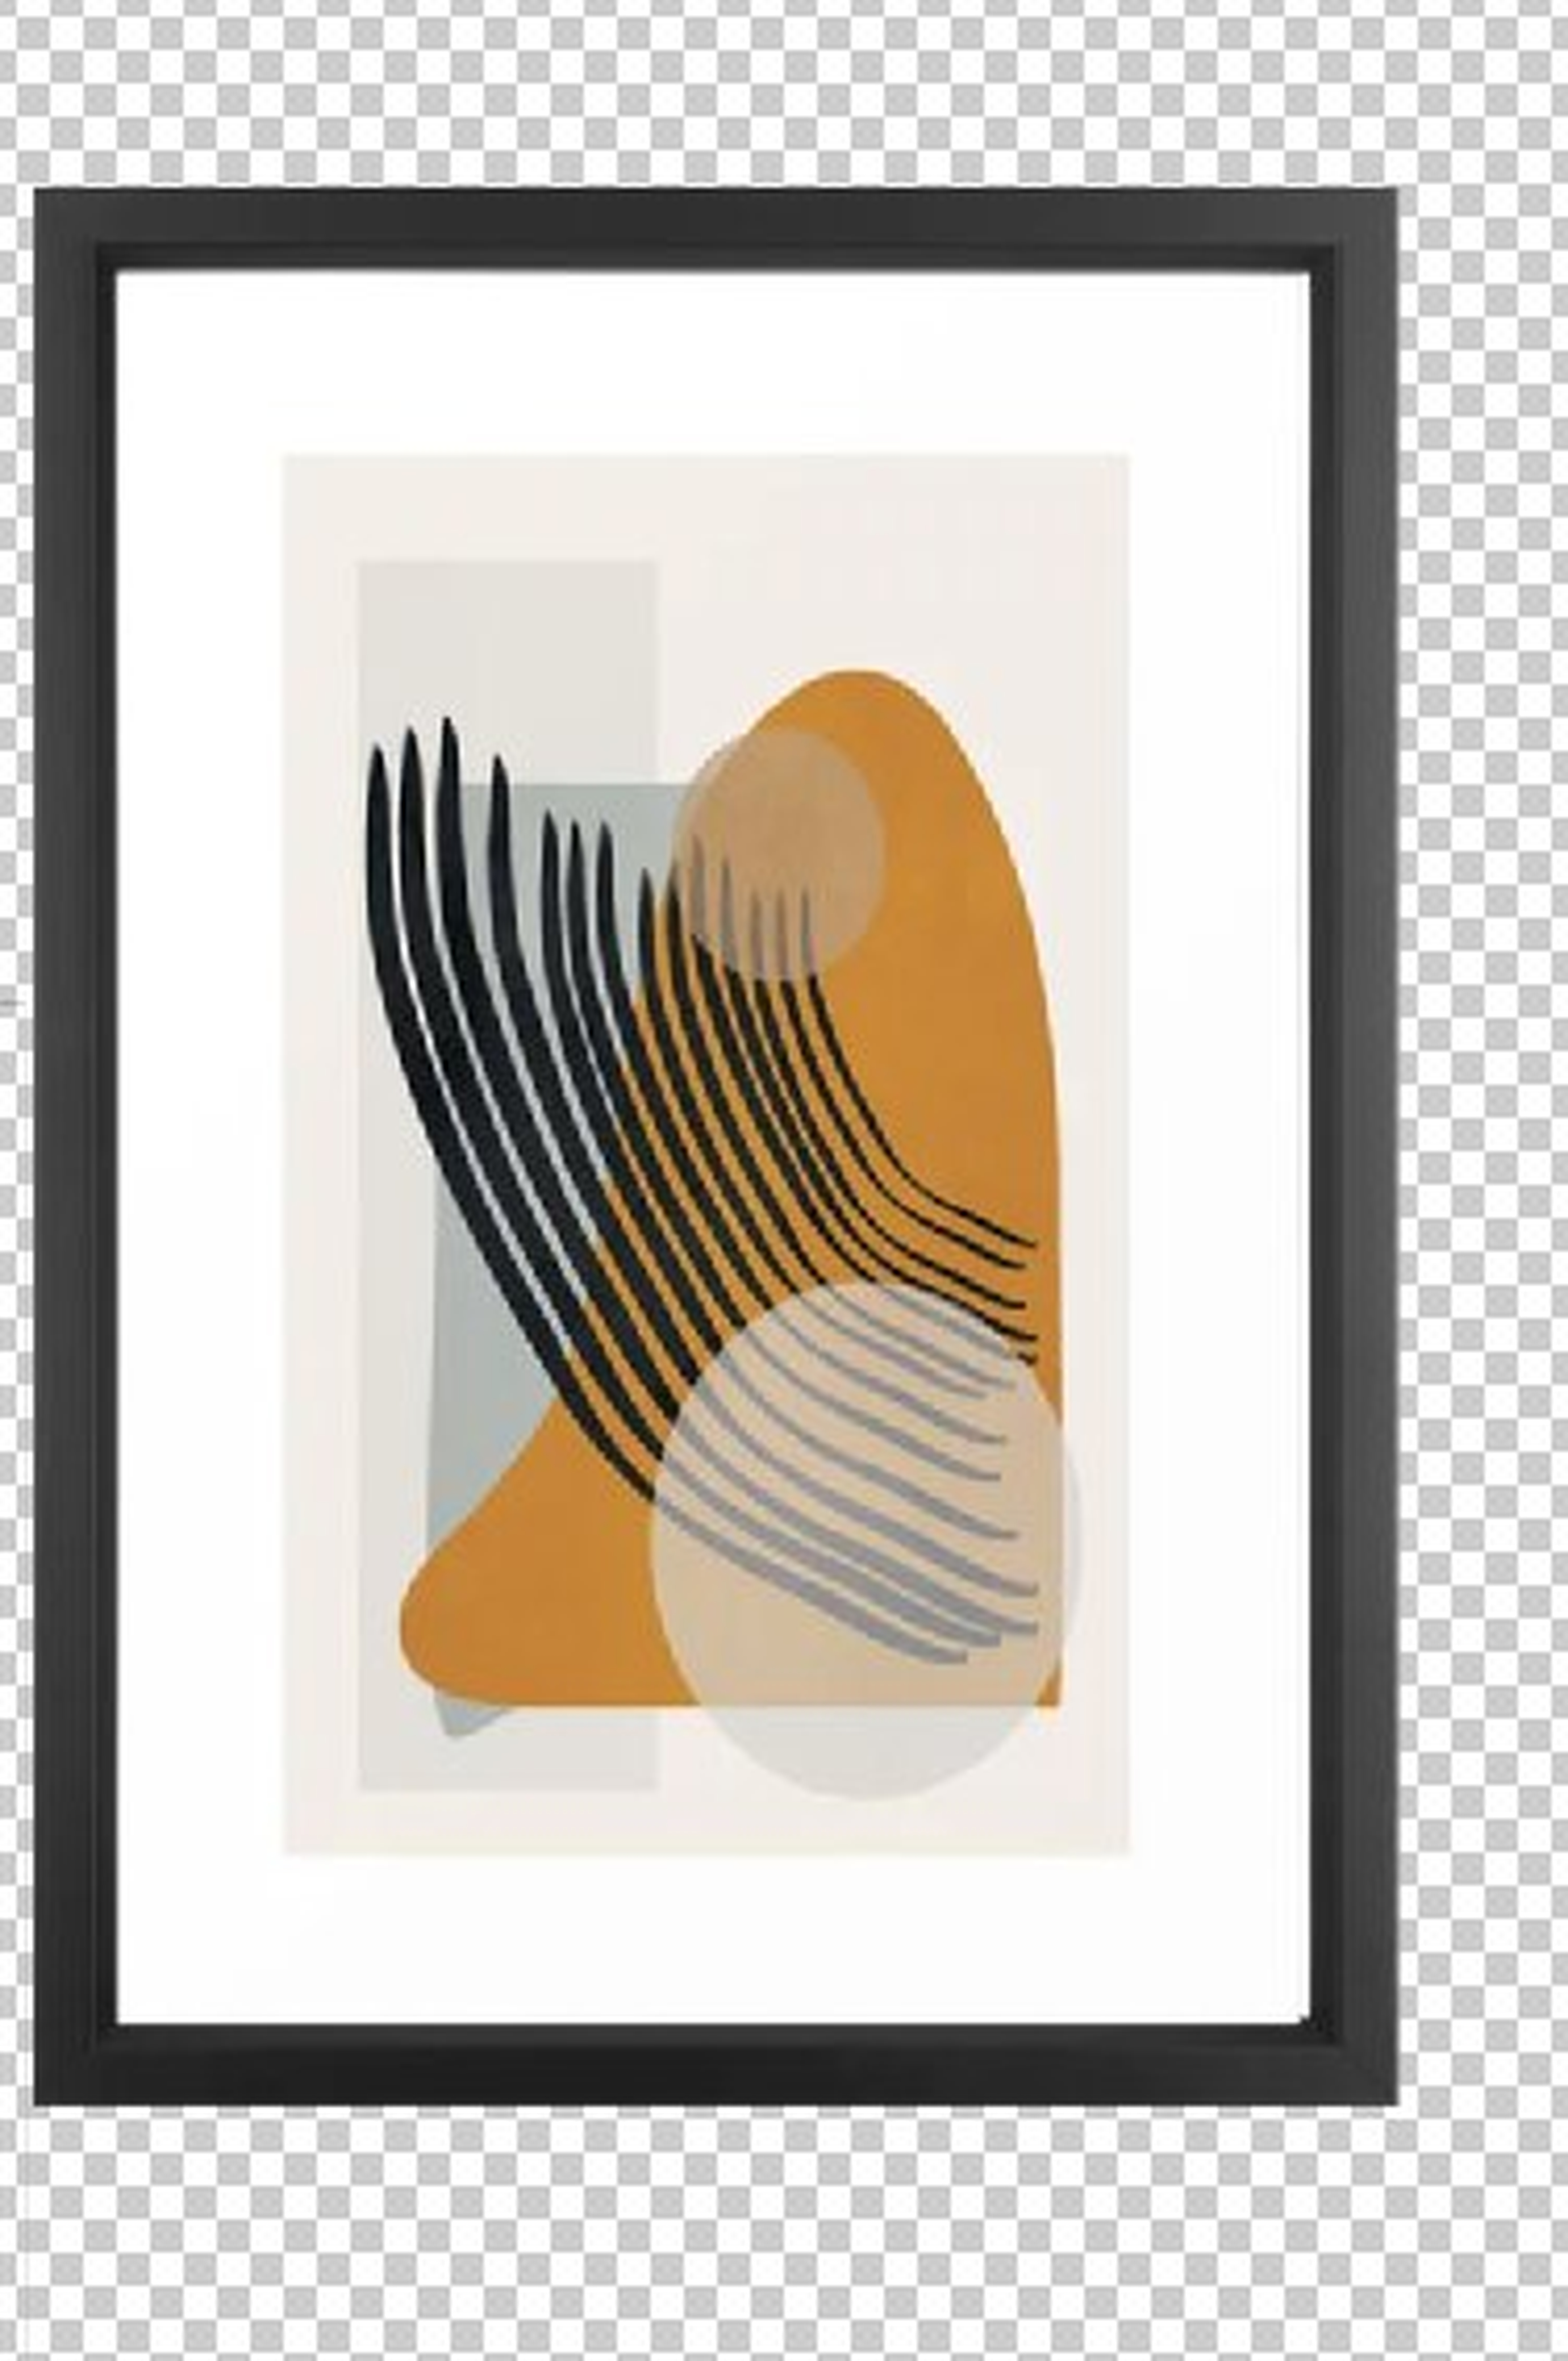 Abstract Shapes 33 Framed Art Print - Society6